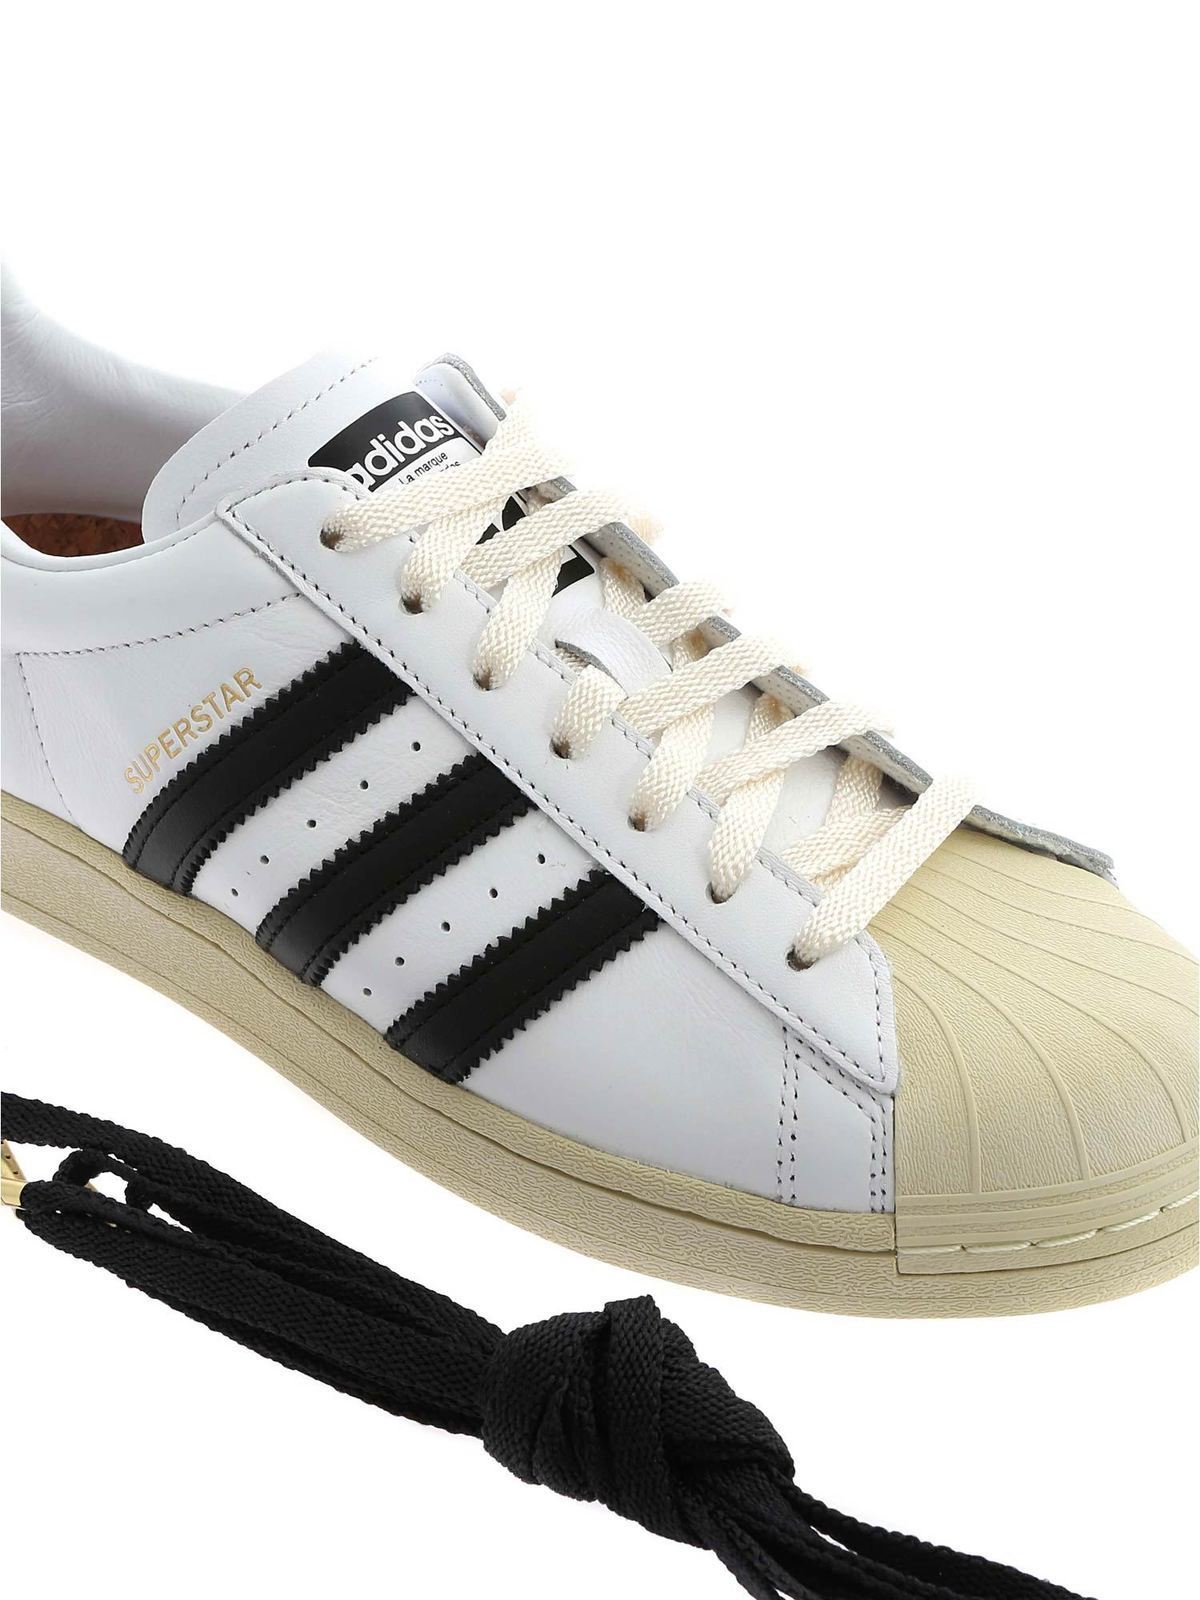 Adidas Originals Superstar in white and black - FV2831